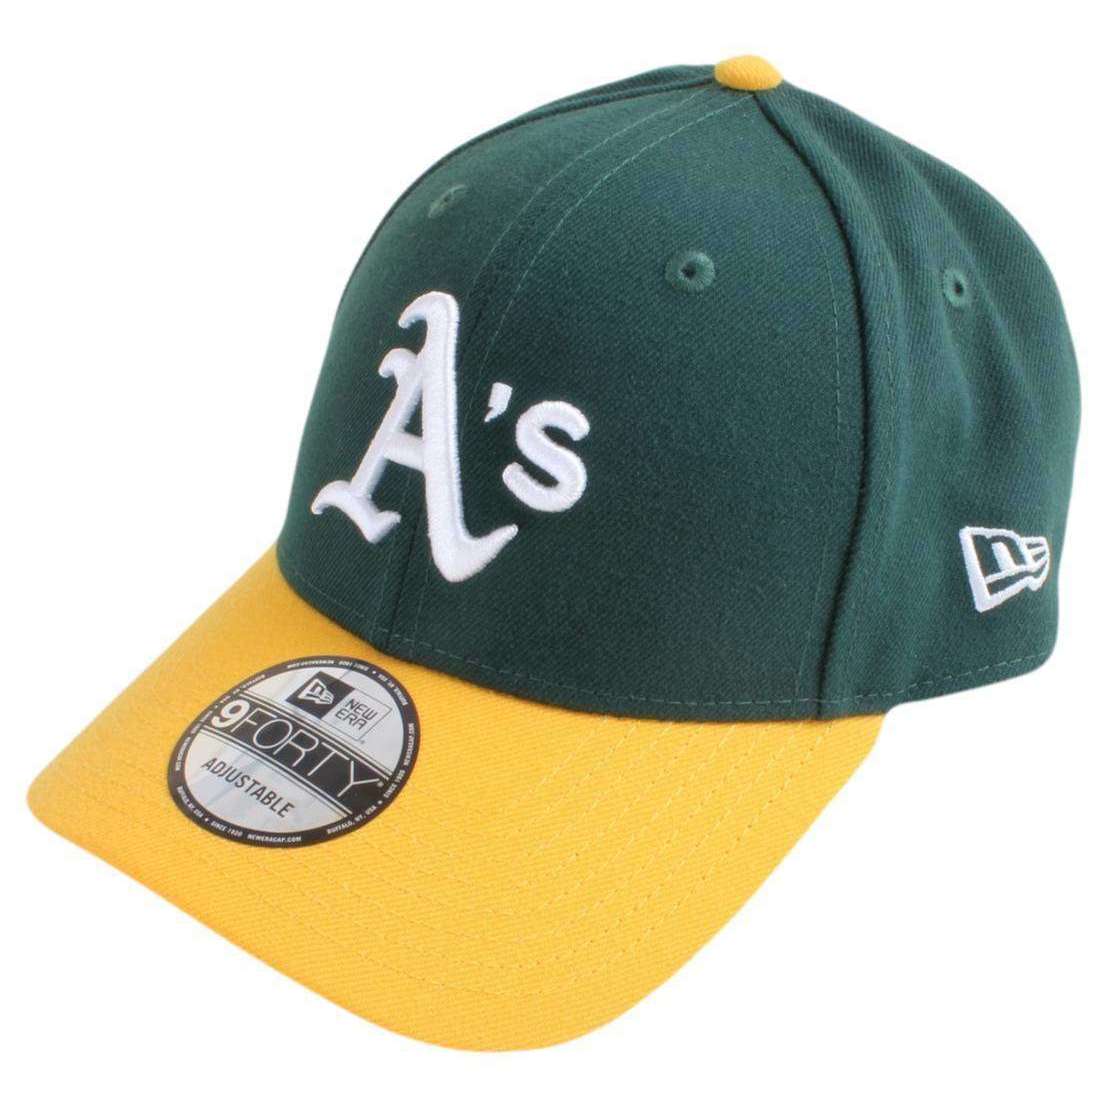 New Era Mens Dark Green/Yellow 9FORTY MLB Oakland Athletics Cap